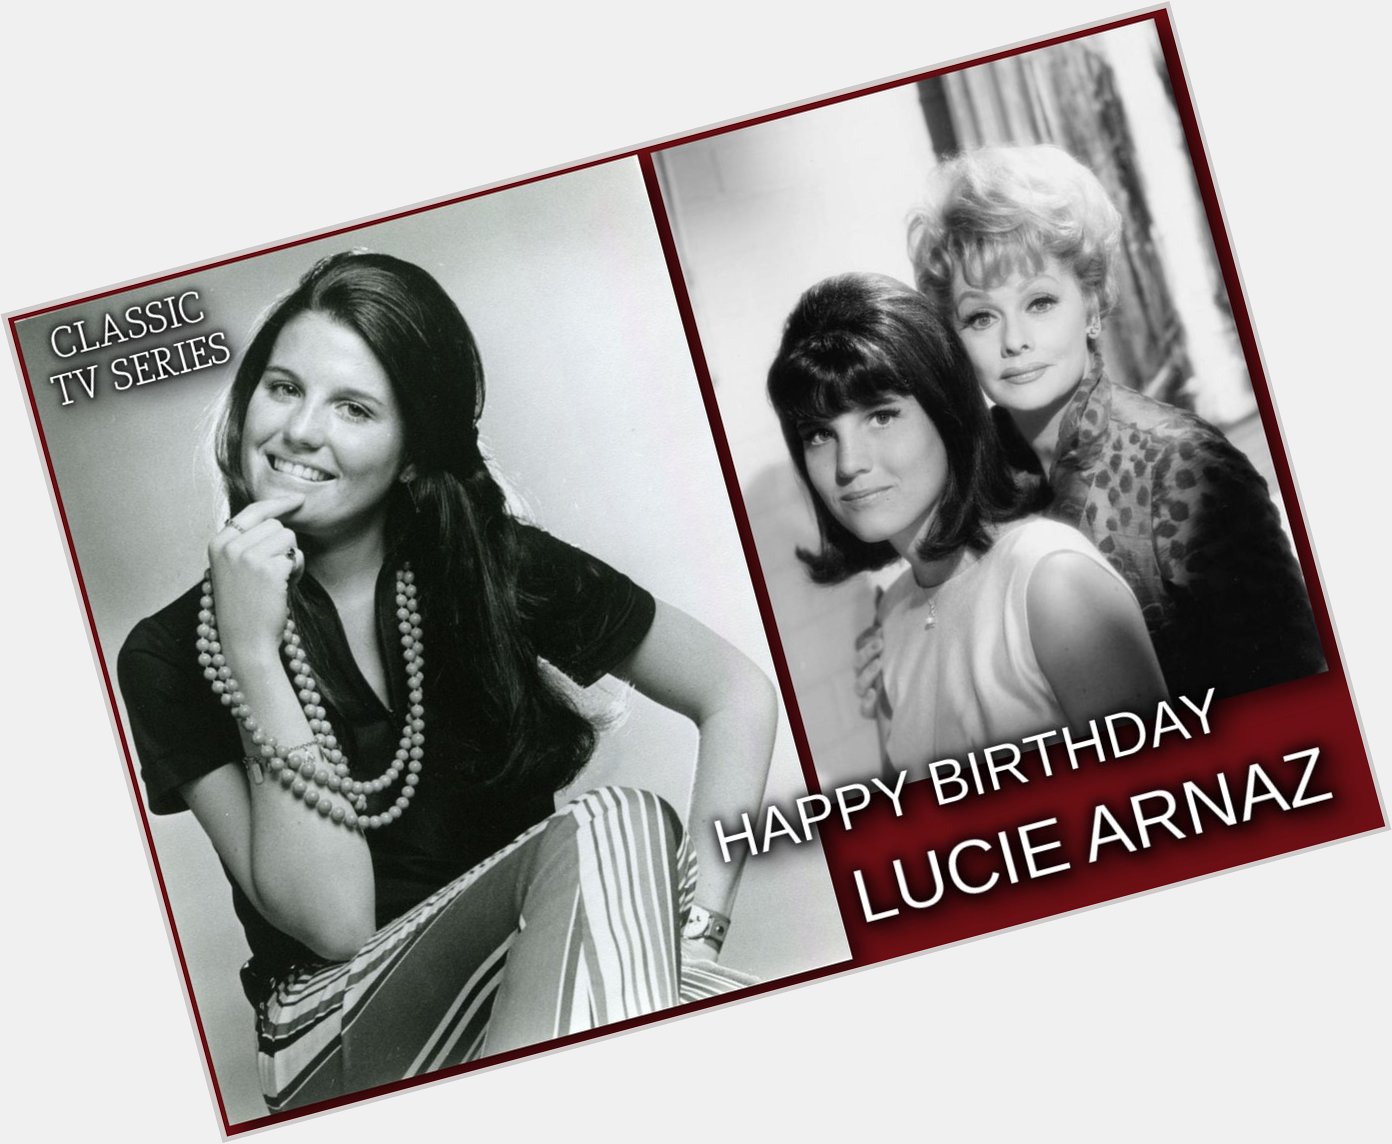 Happy 71st Birthday Lucie Arnaz, July 17th, 1951 